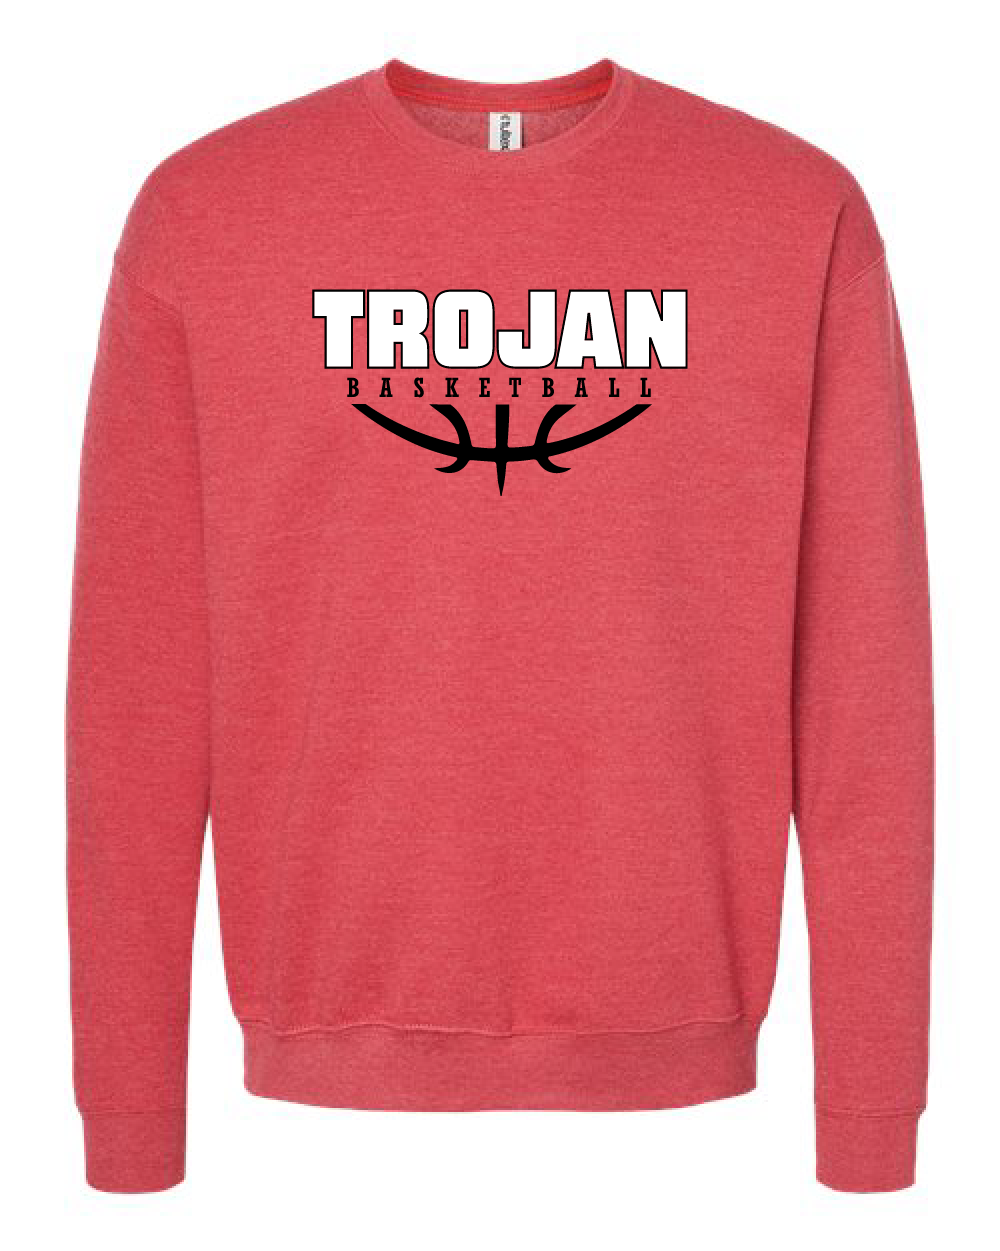 Trojan Basketball Ribs Sweatshirt